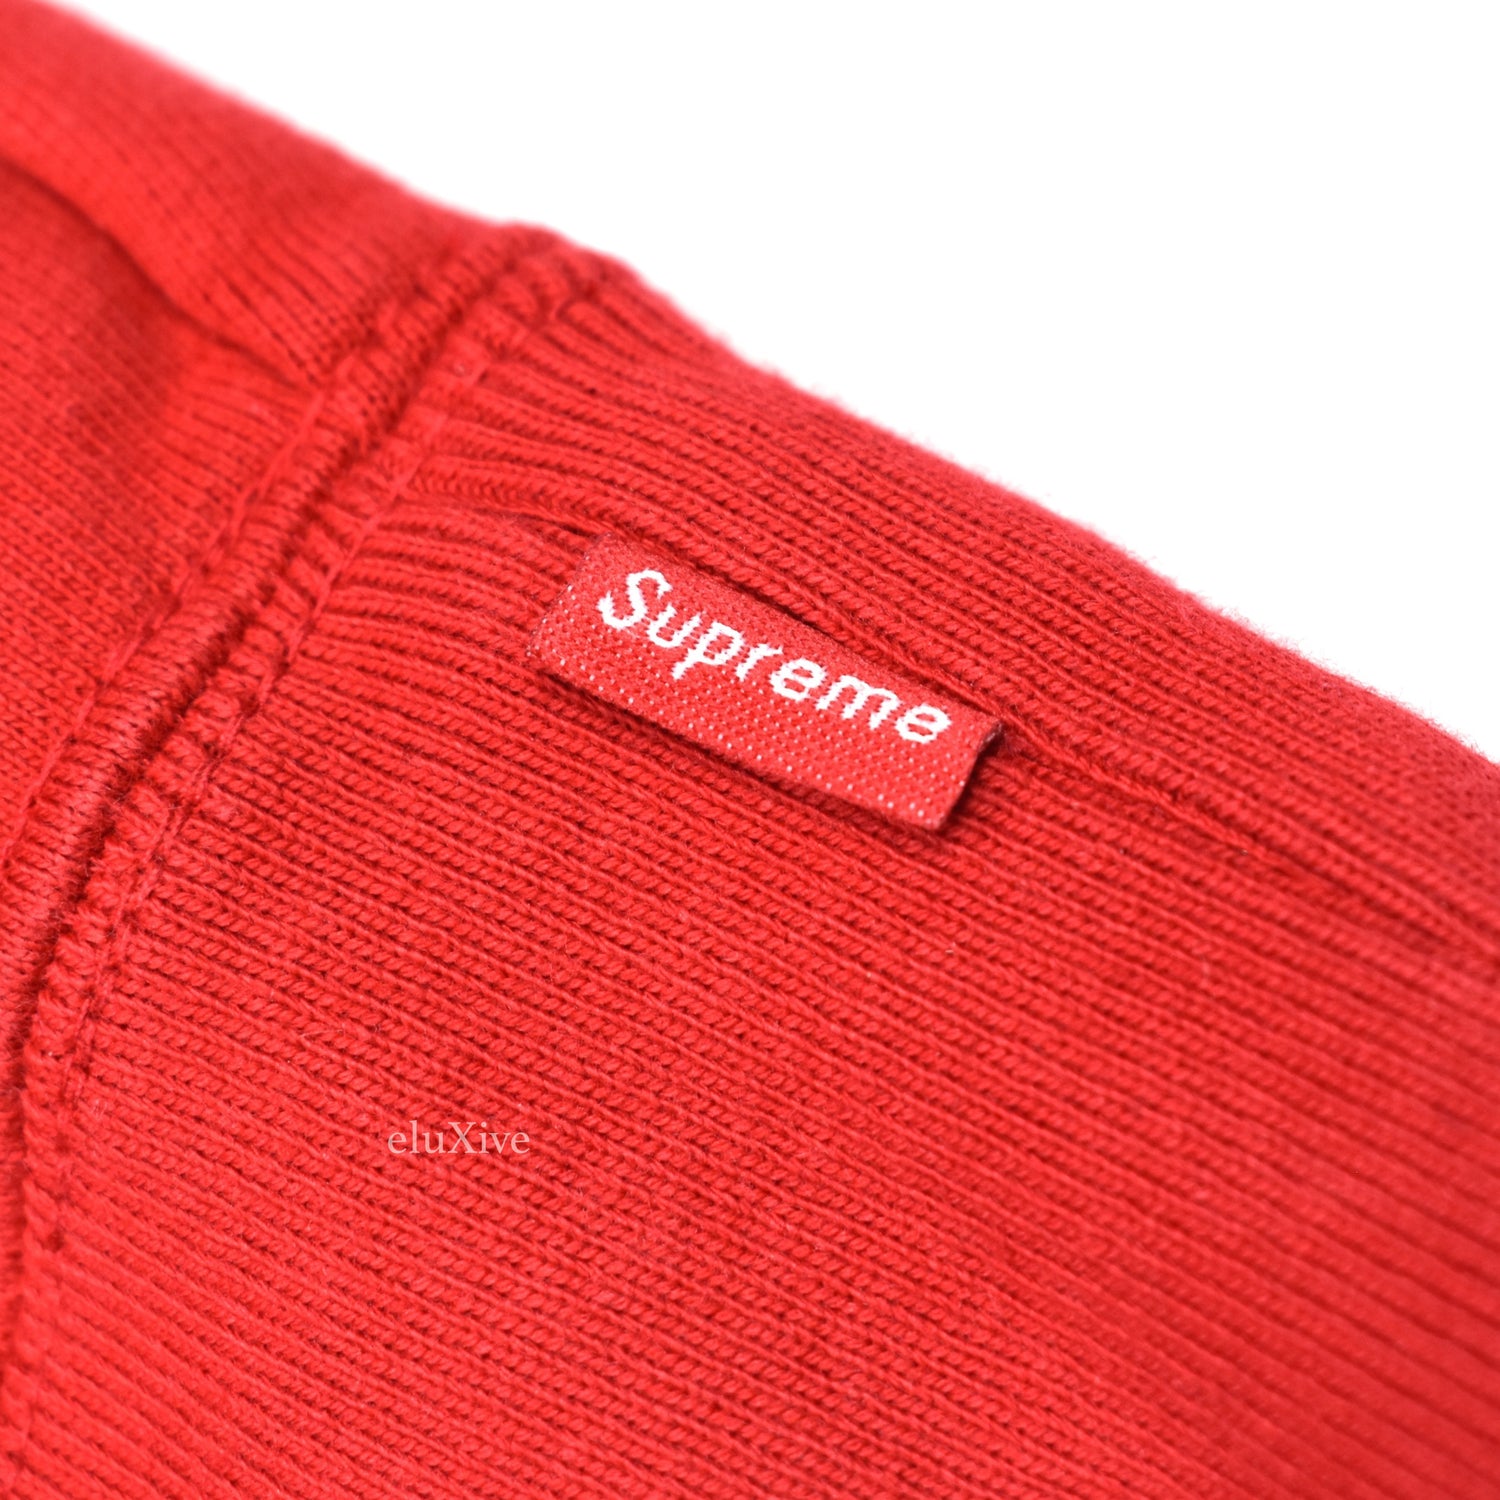 supreme red sweatshirt